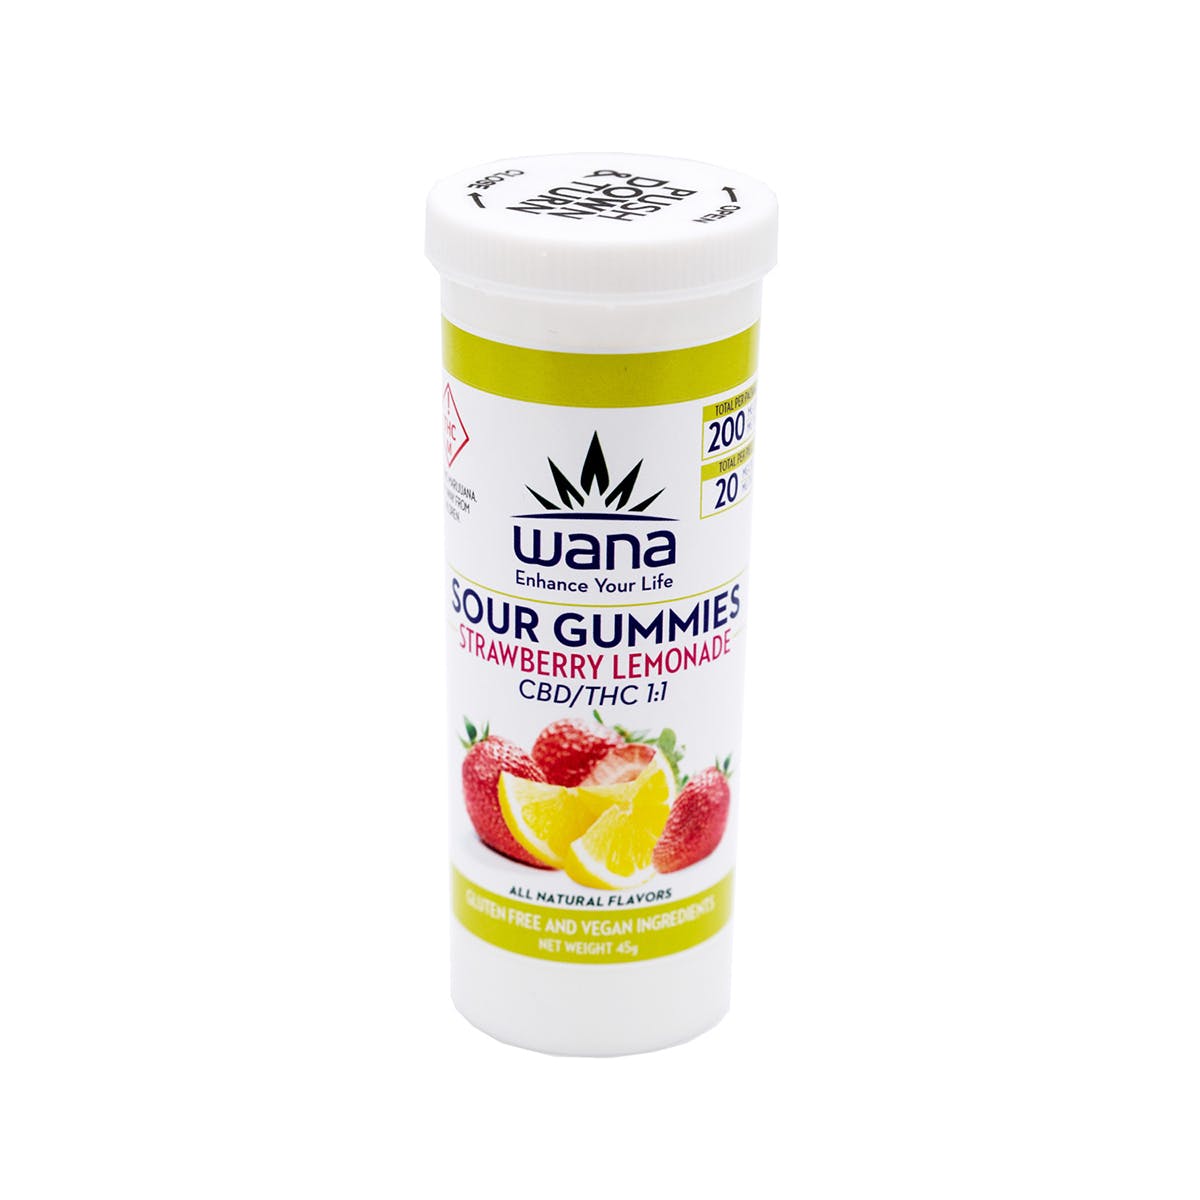 marijuana-dispensaries-the-herbal-center-broadway-rec-in-denver-strawberry-lemonade-11-gummies-200mg-med